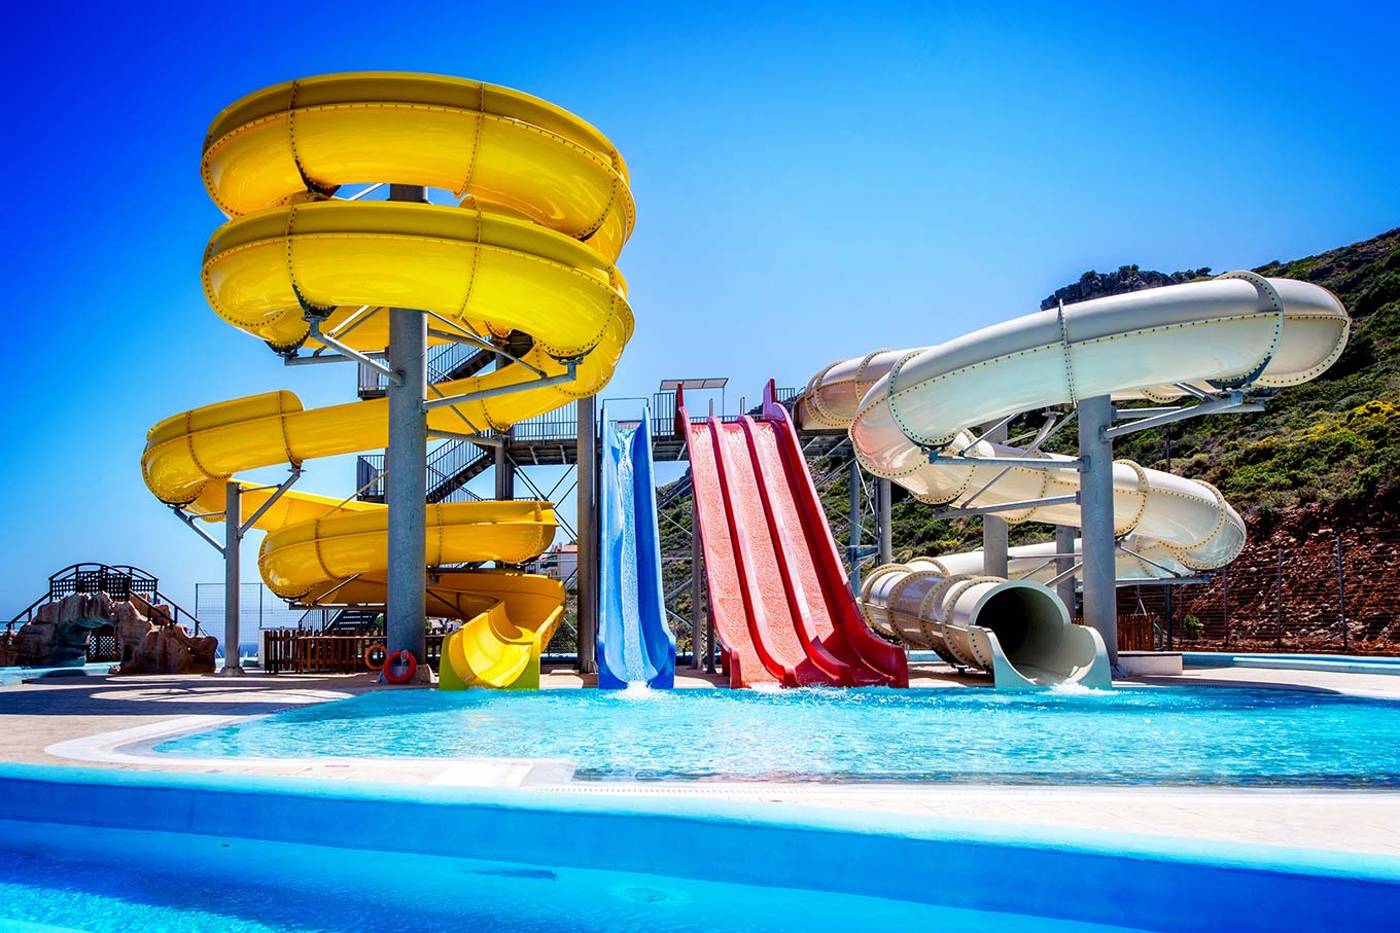 The Village Resort and Waterpark in Crete, Greece